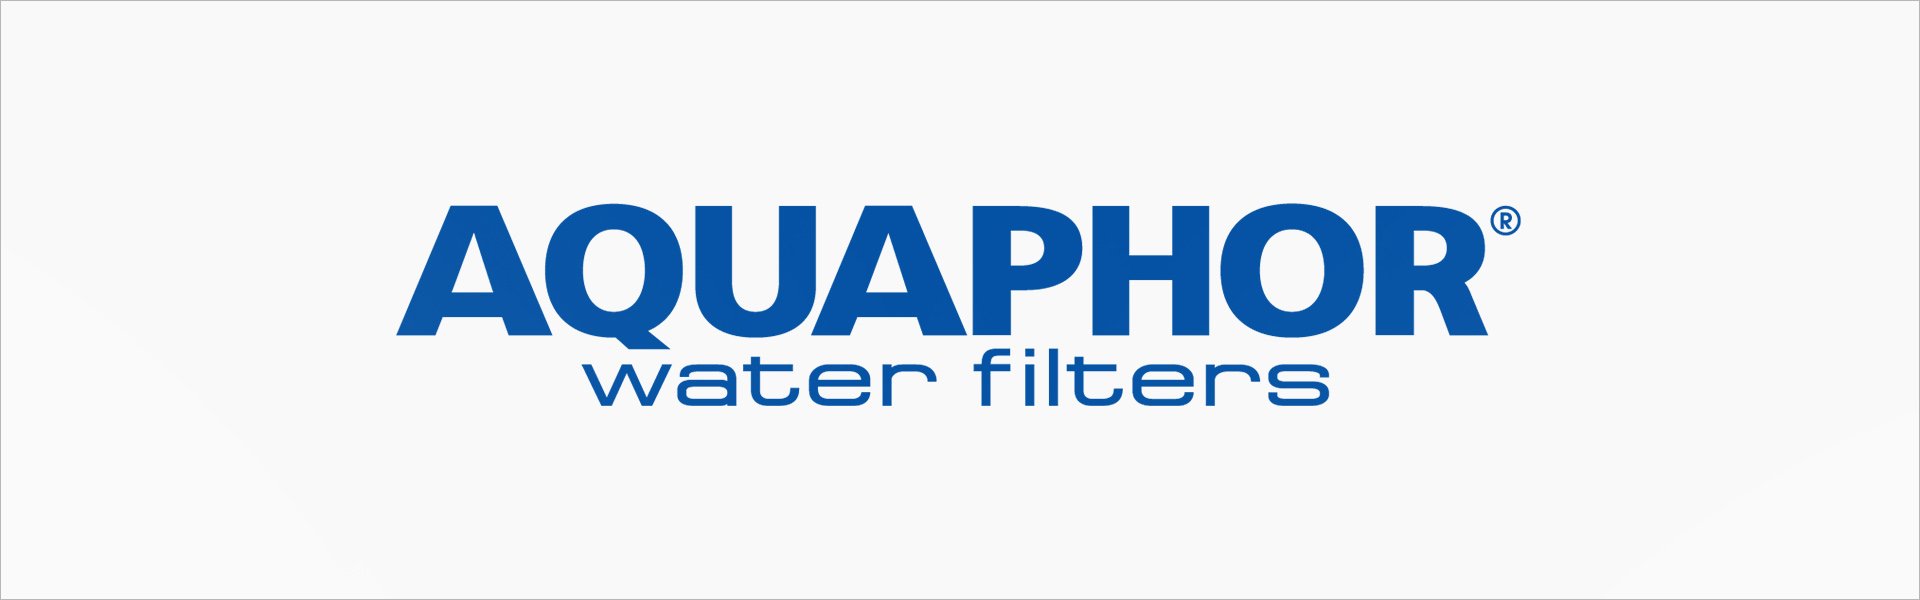 Aquaphor B100-15 Standard X3 Aquaphor